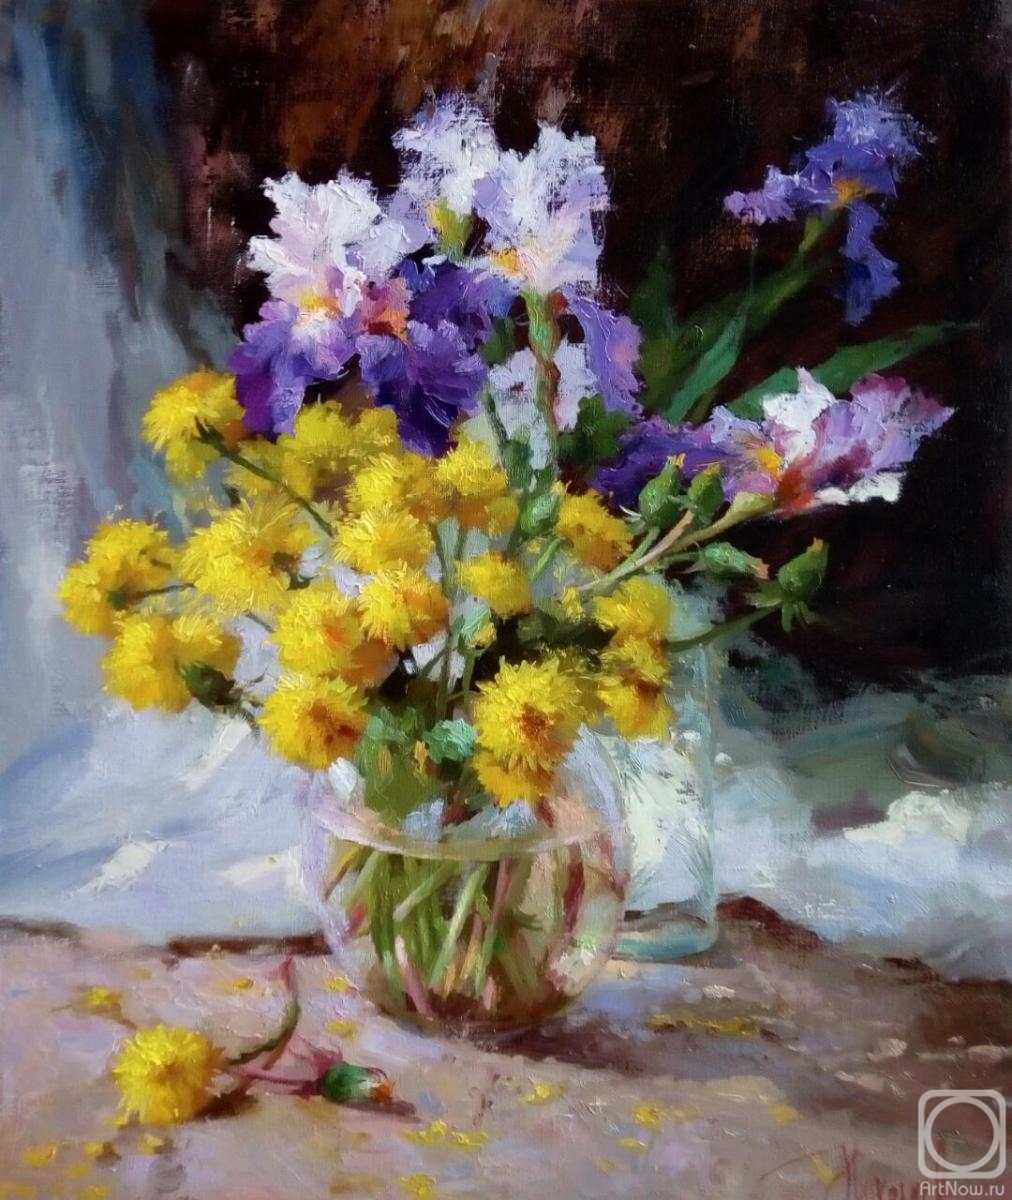 Nikolaev Yury. Dandelions and irises